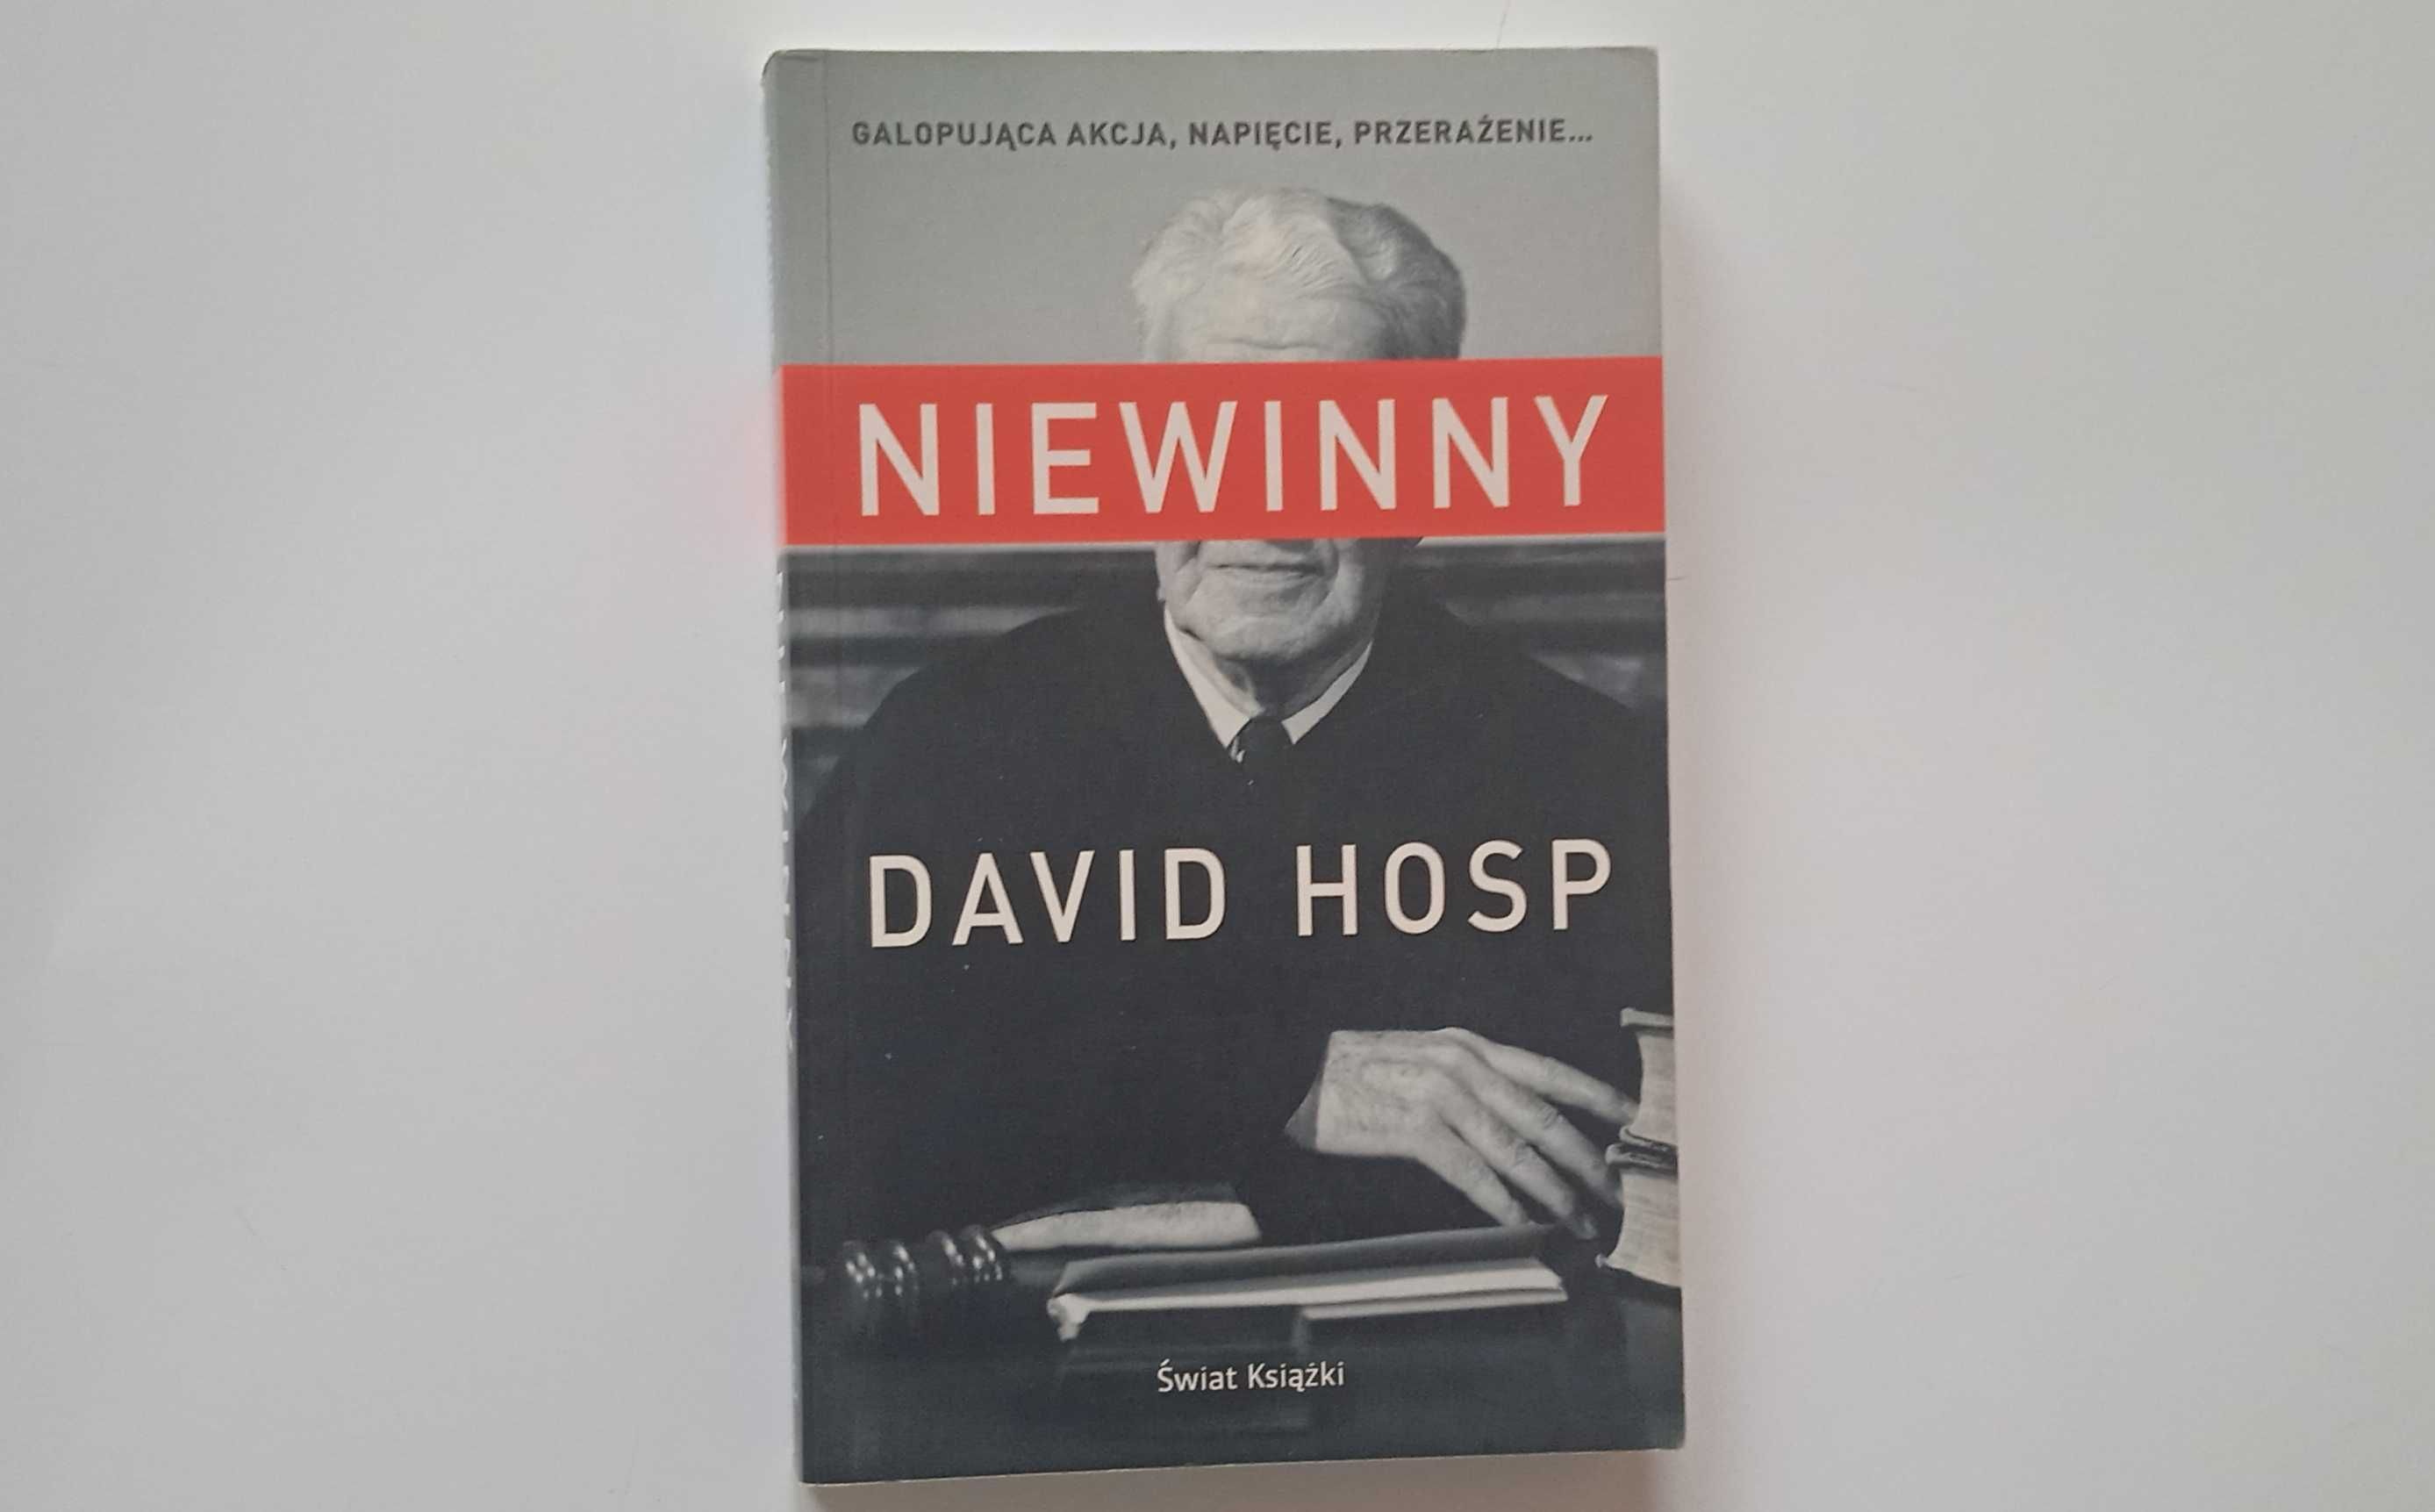 książka "Niewinny" David Hosp